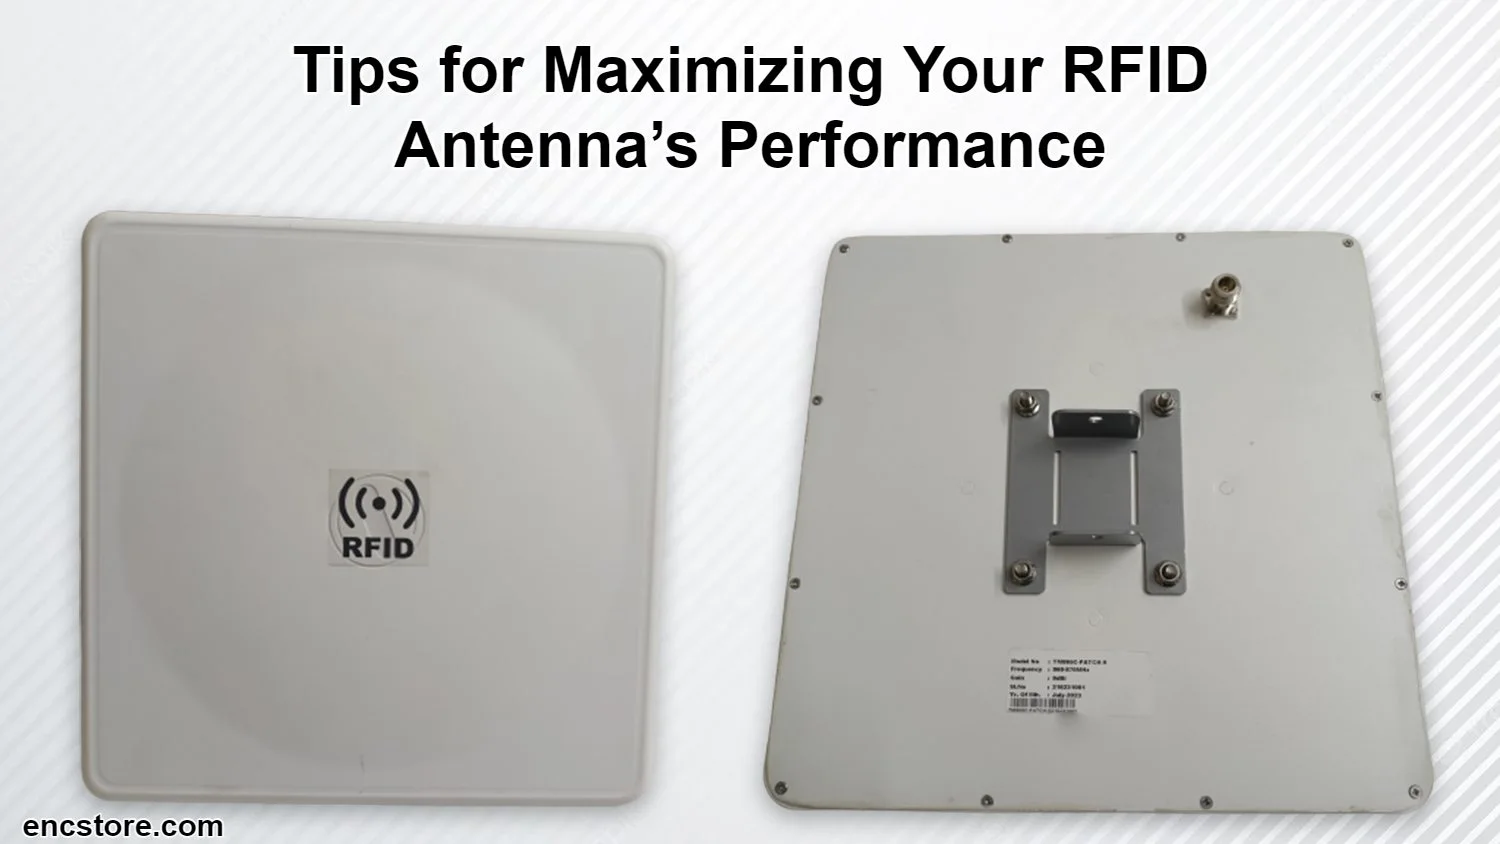 RFID Antenna’s